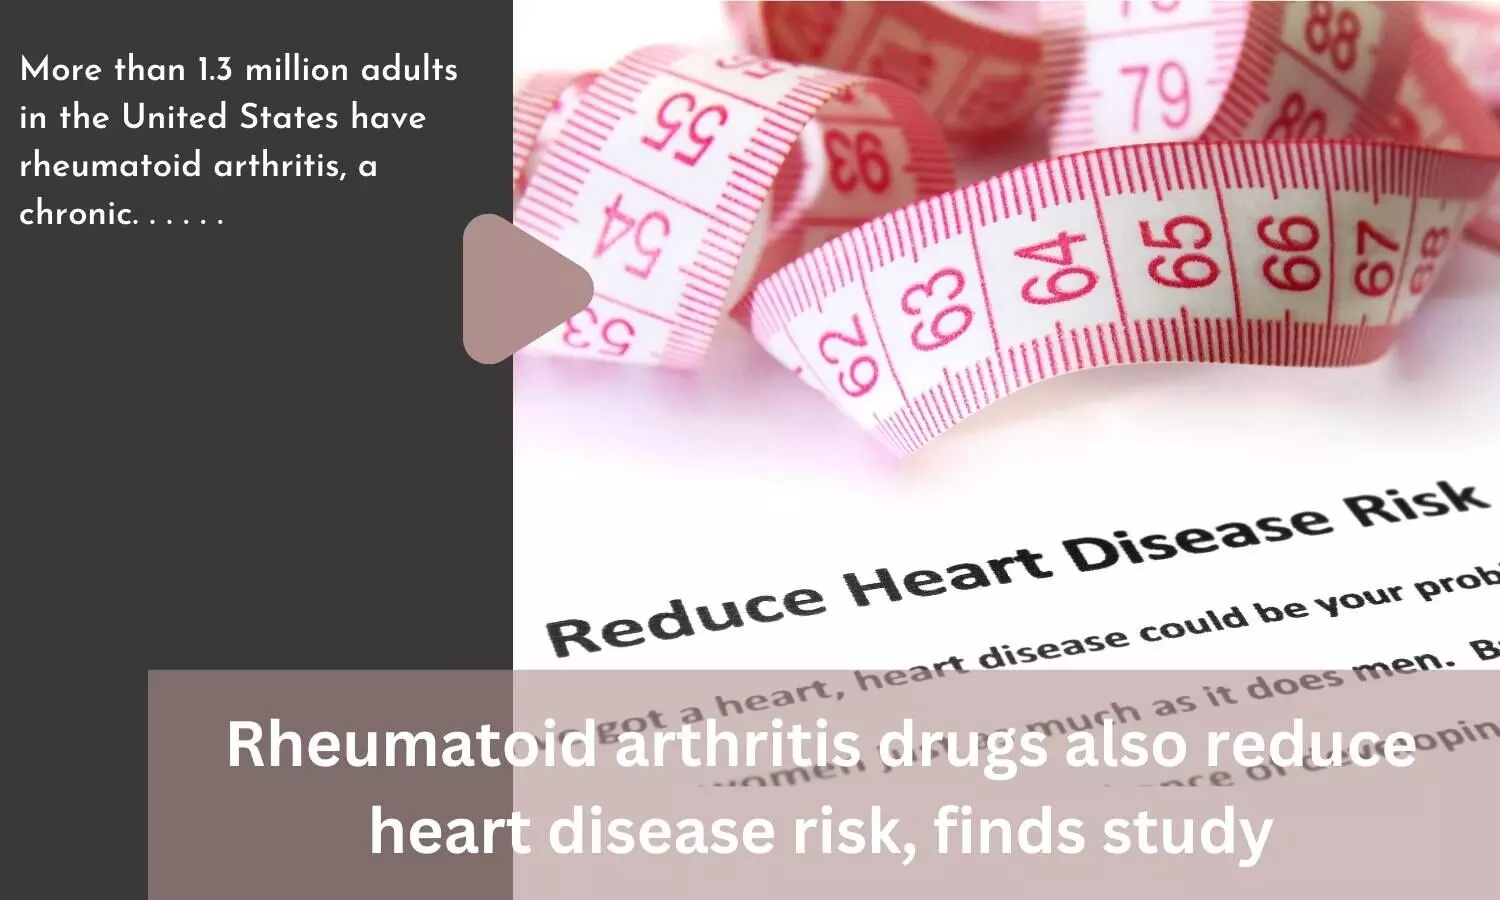 Rheumatoid arthritis drugs also reduce heart disease risk, finds study